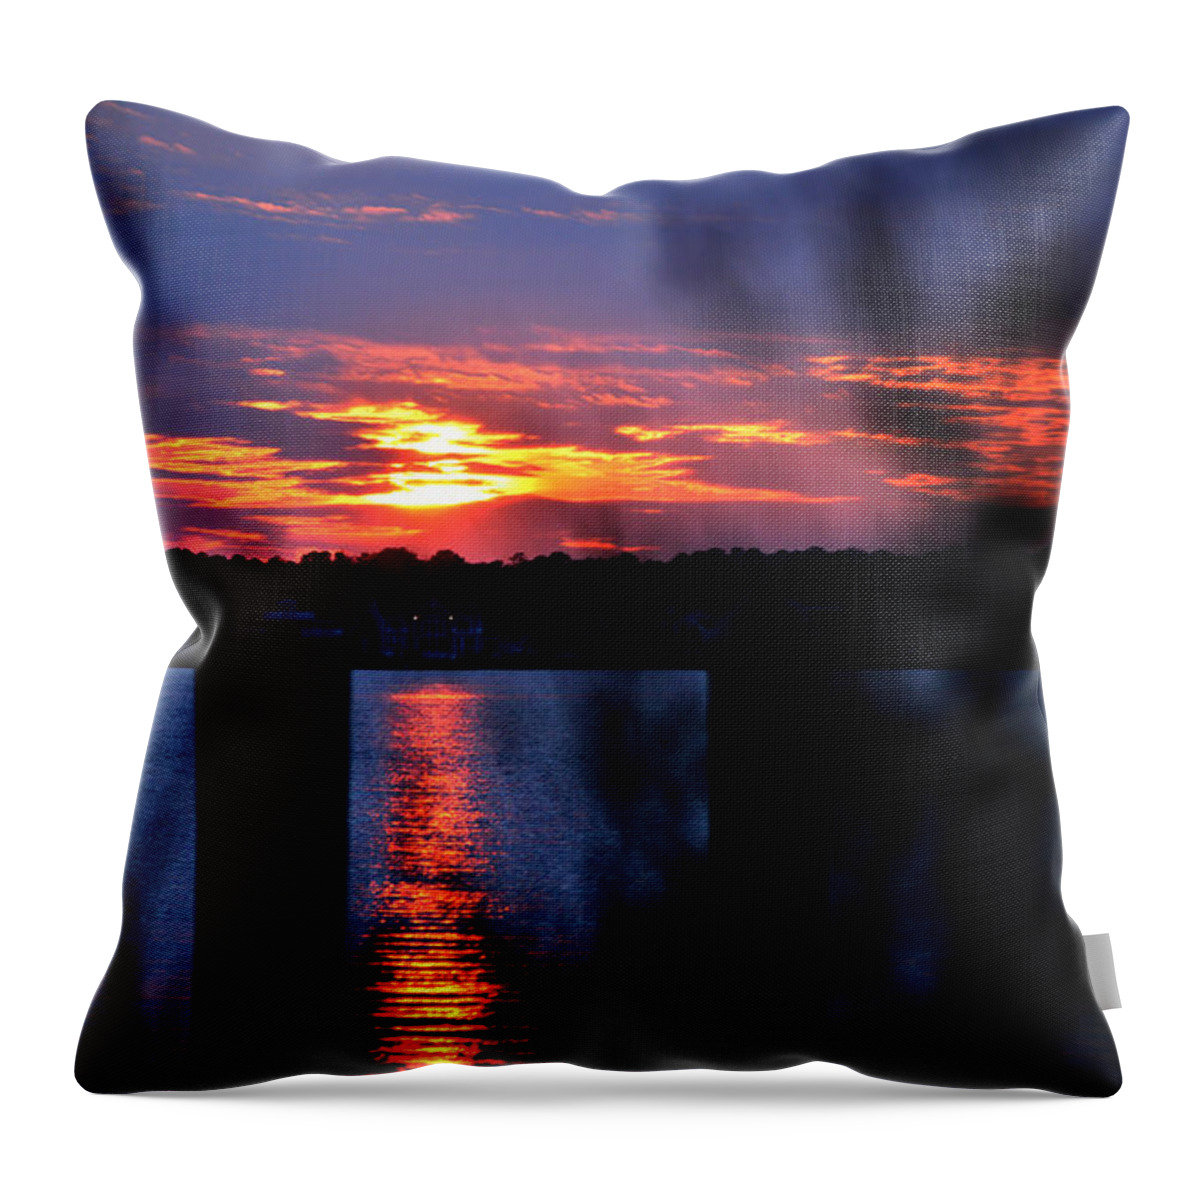 St Marten River Throw Pillow featuring the photograph St. Marten River Sunset by Bill Swartwout